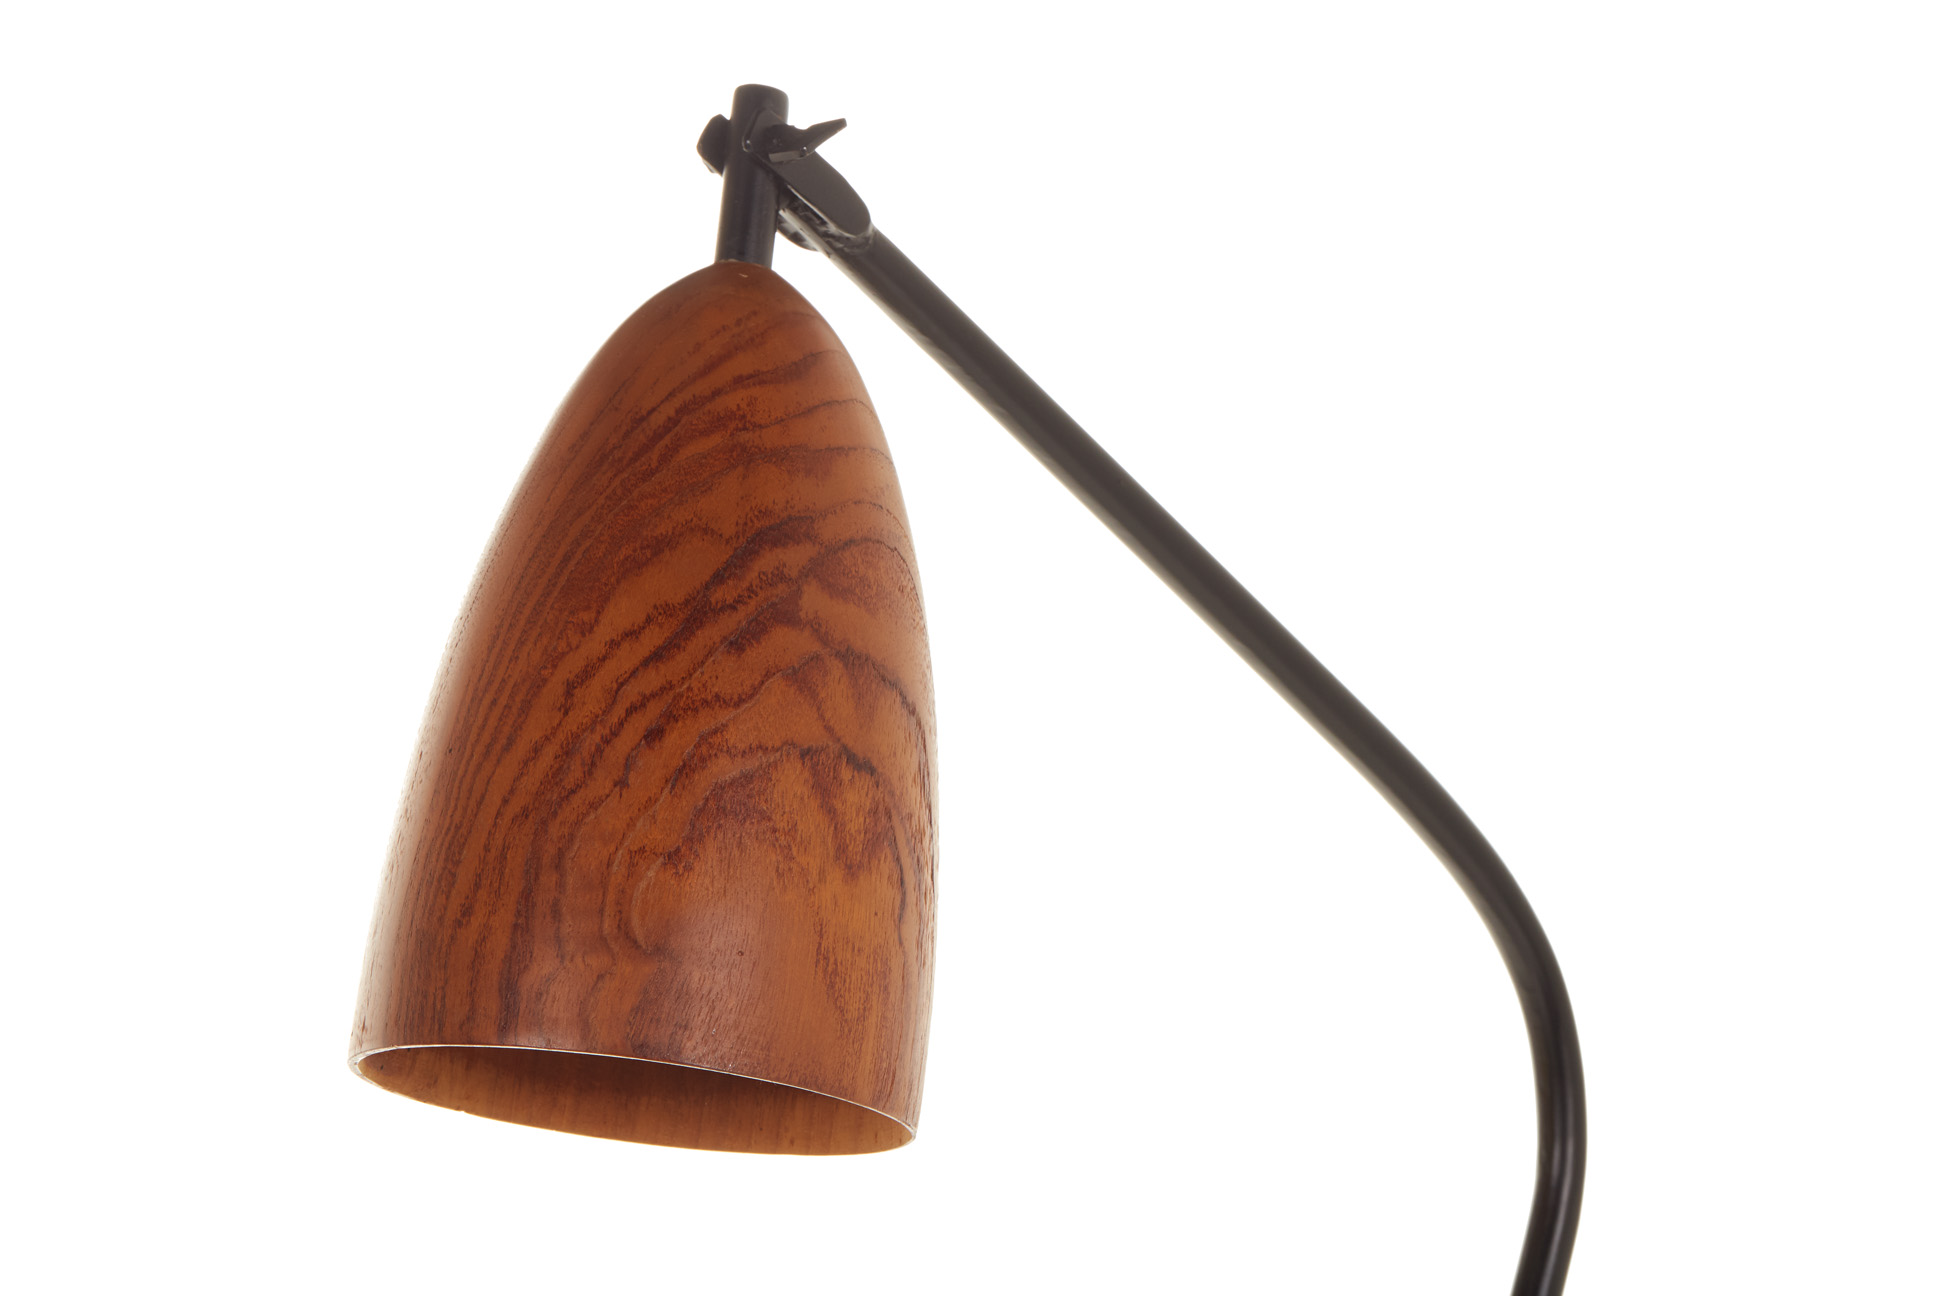 A GRETA MAGNUSSON STYLE 'GRASSHOPPER' FLOOR LAMP - Image 2 of 2